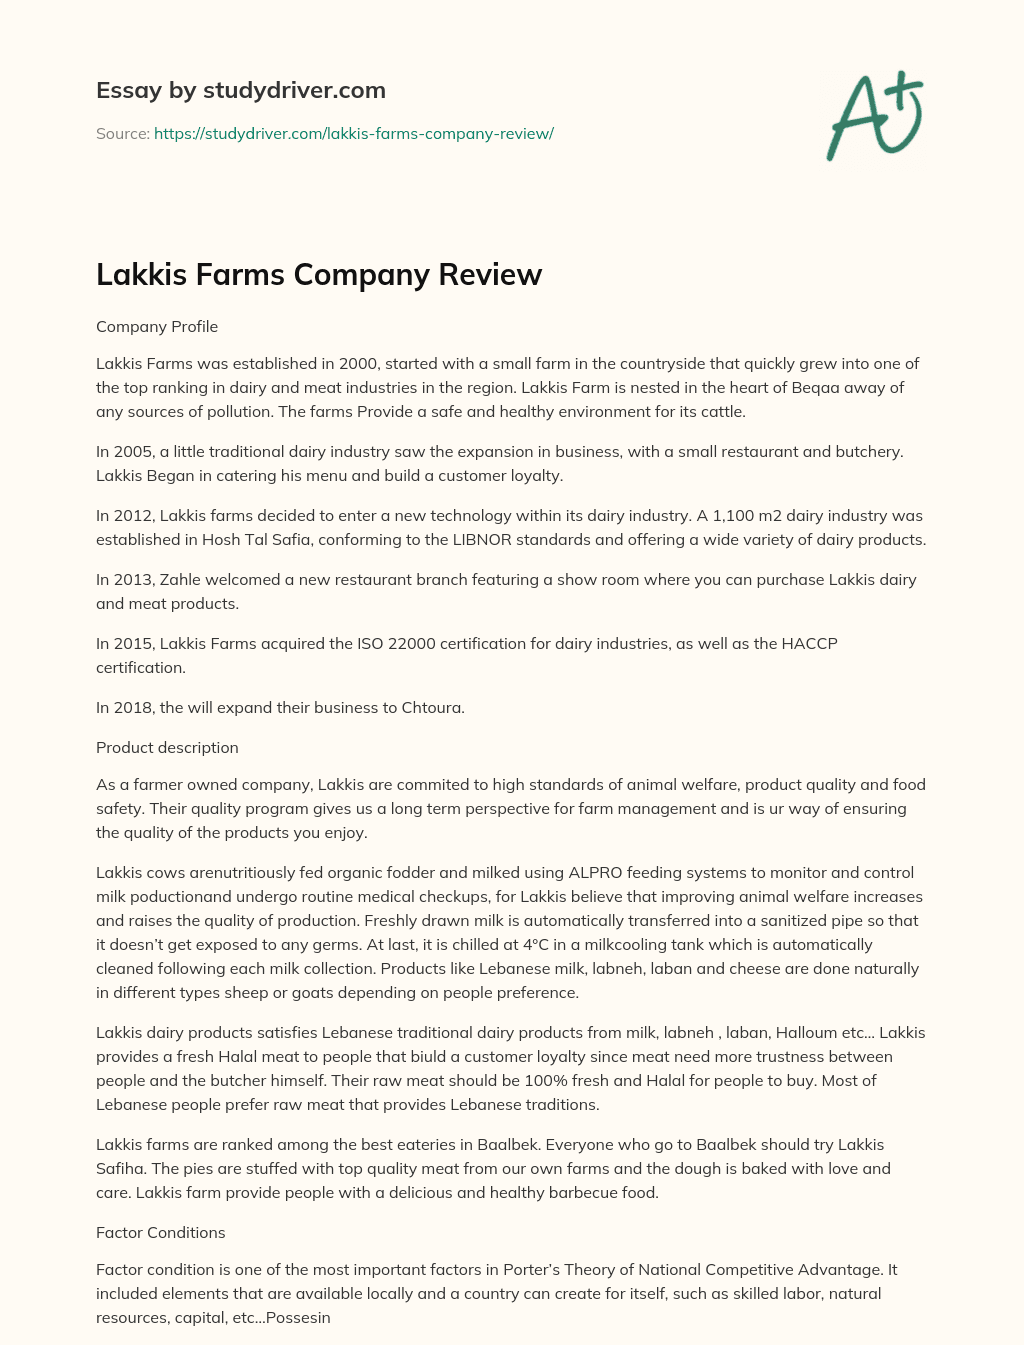 Lakkis Farms Company Review essay